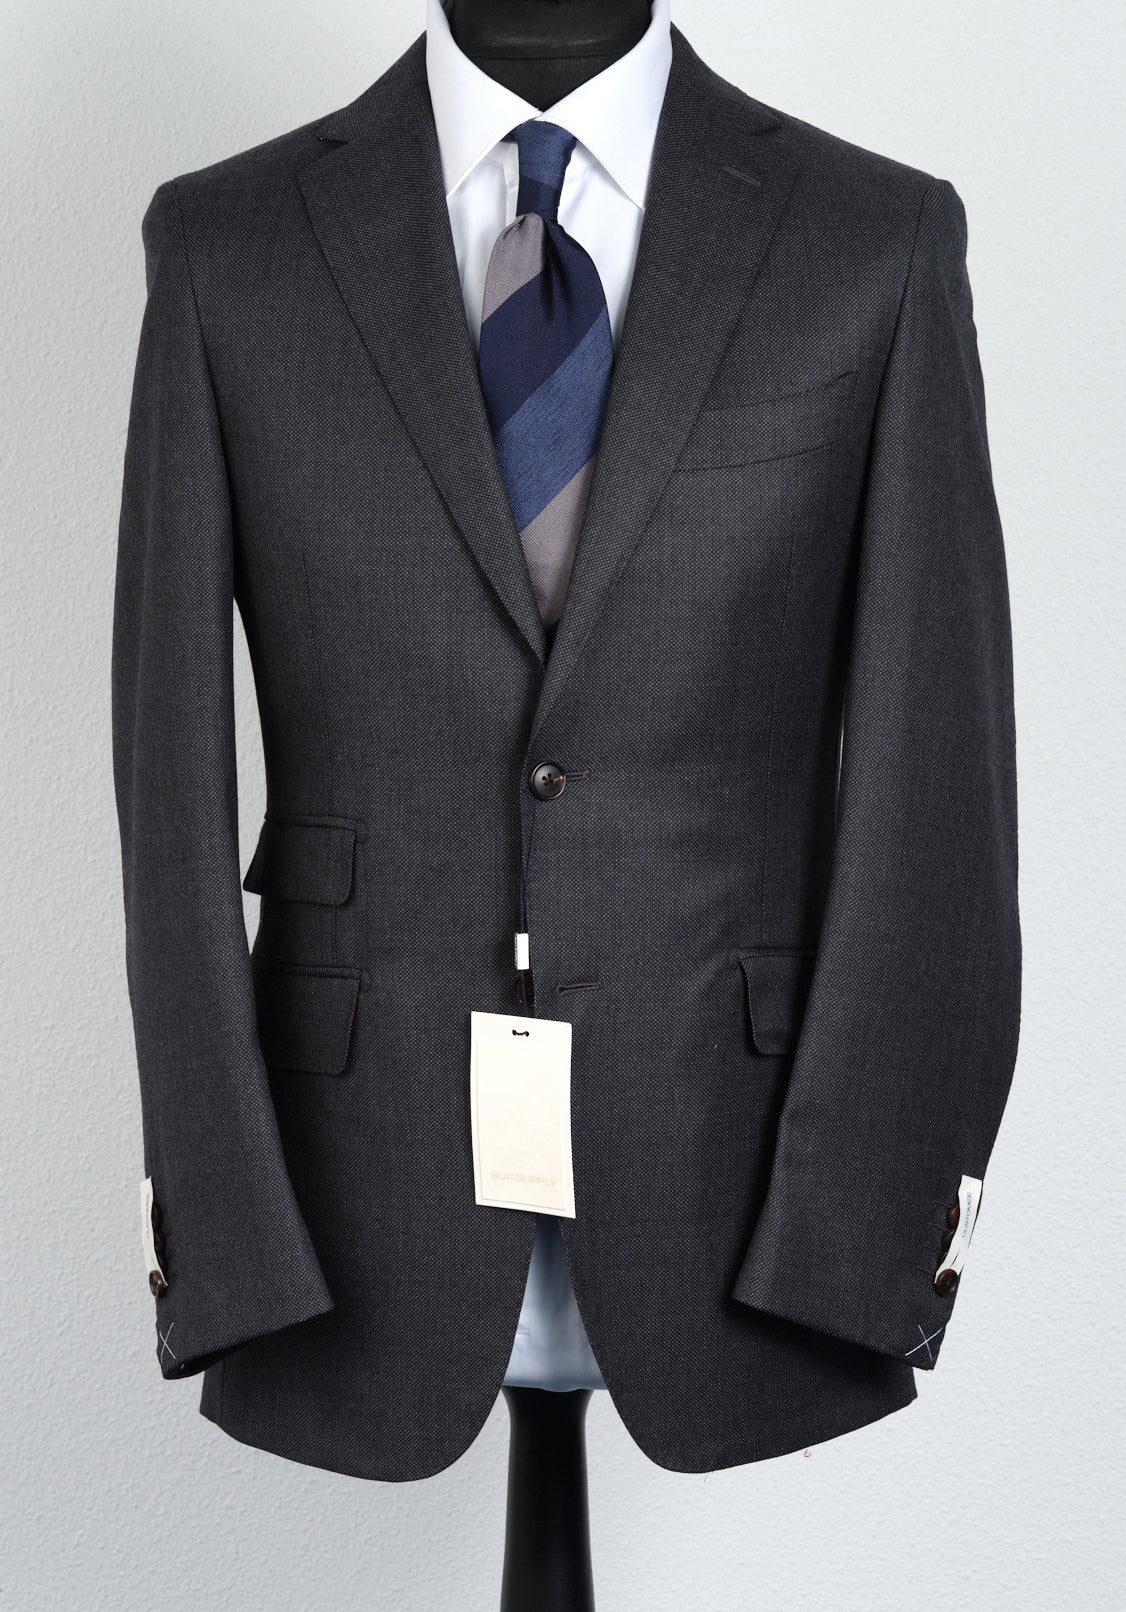 New Suitsupply Sienna Dark Gray Birdseye Pure Wool All Season Suit - Size 38R (Regular Fit)